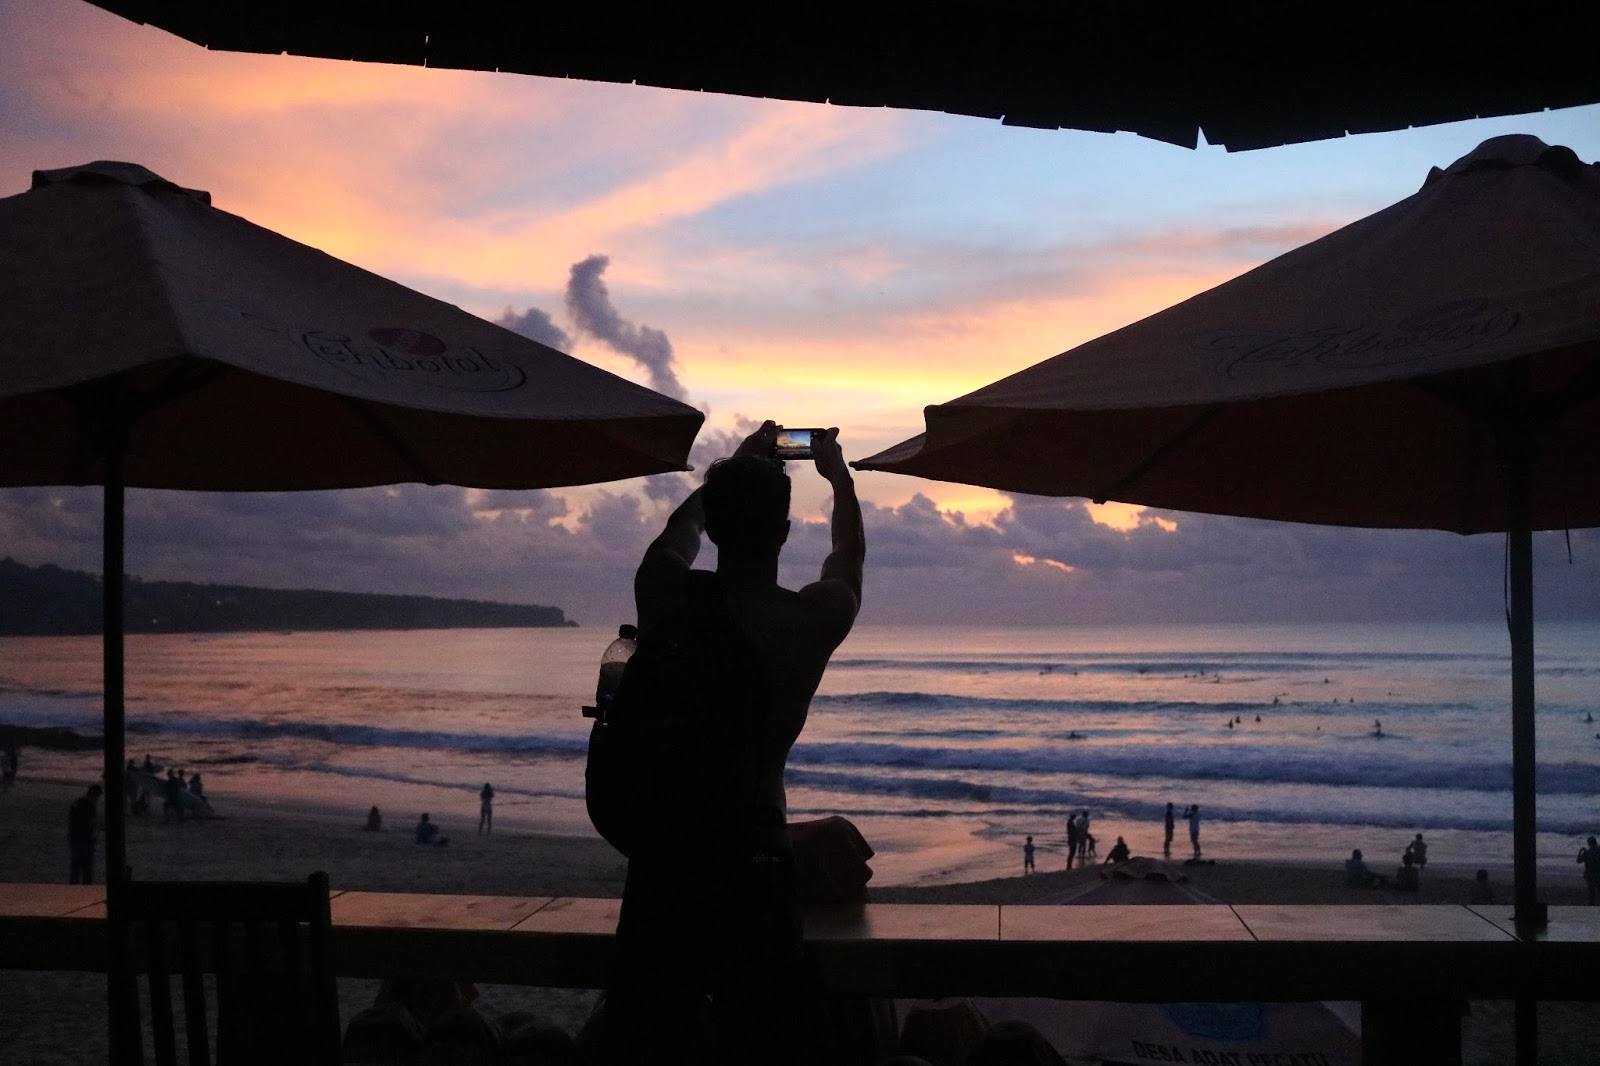 Sunset at Dreamland Beach, Bali